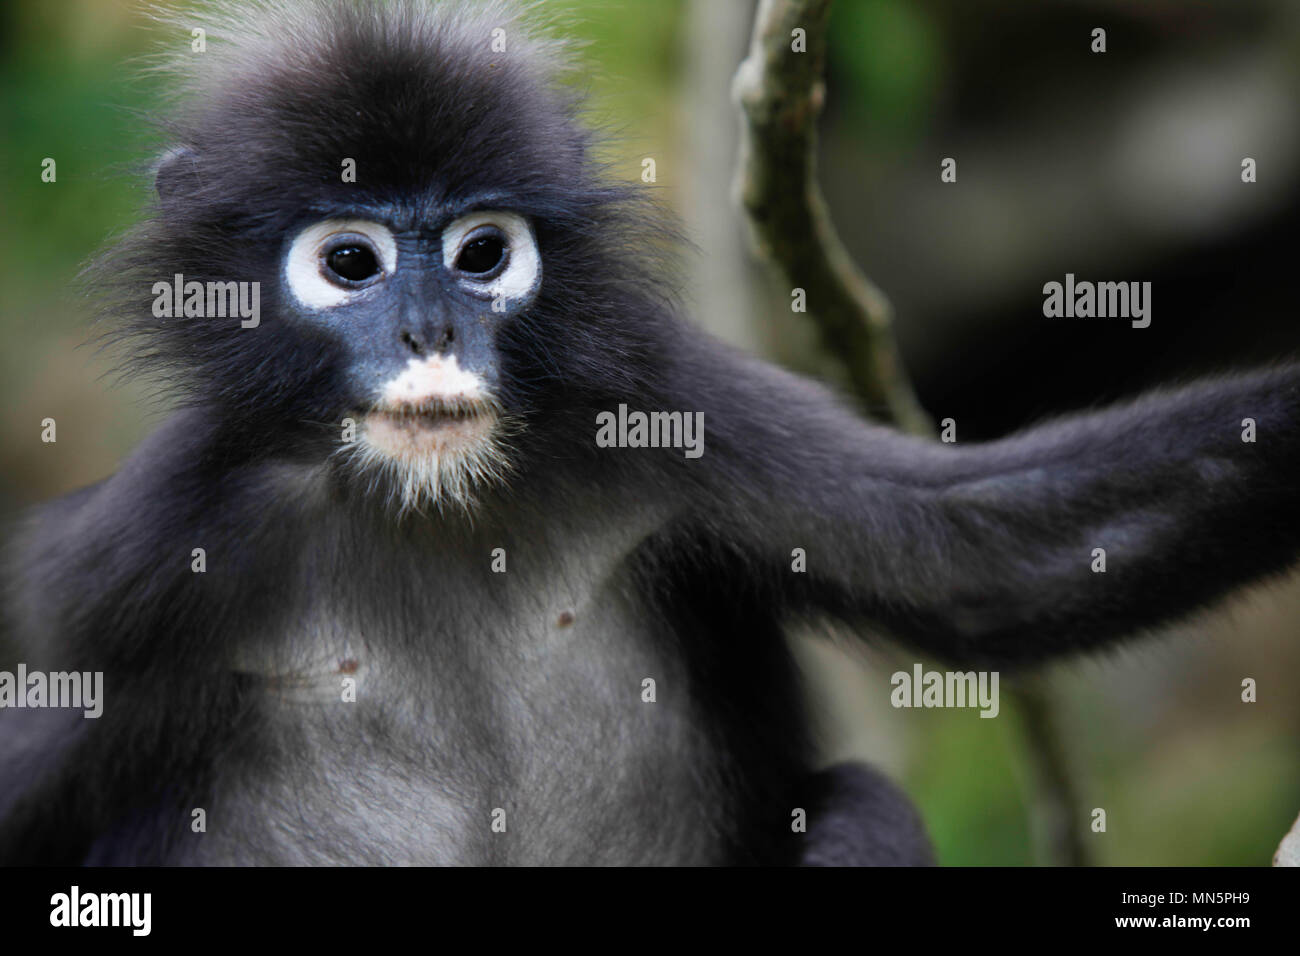 Thai black primate from Monkey Island of Thailand Stock Photo